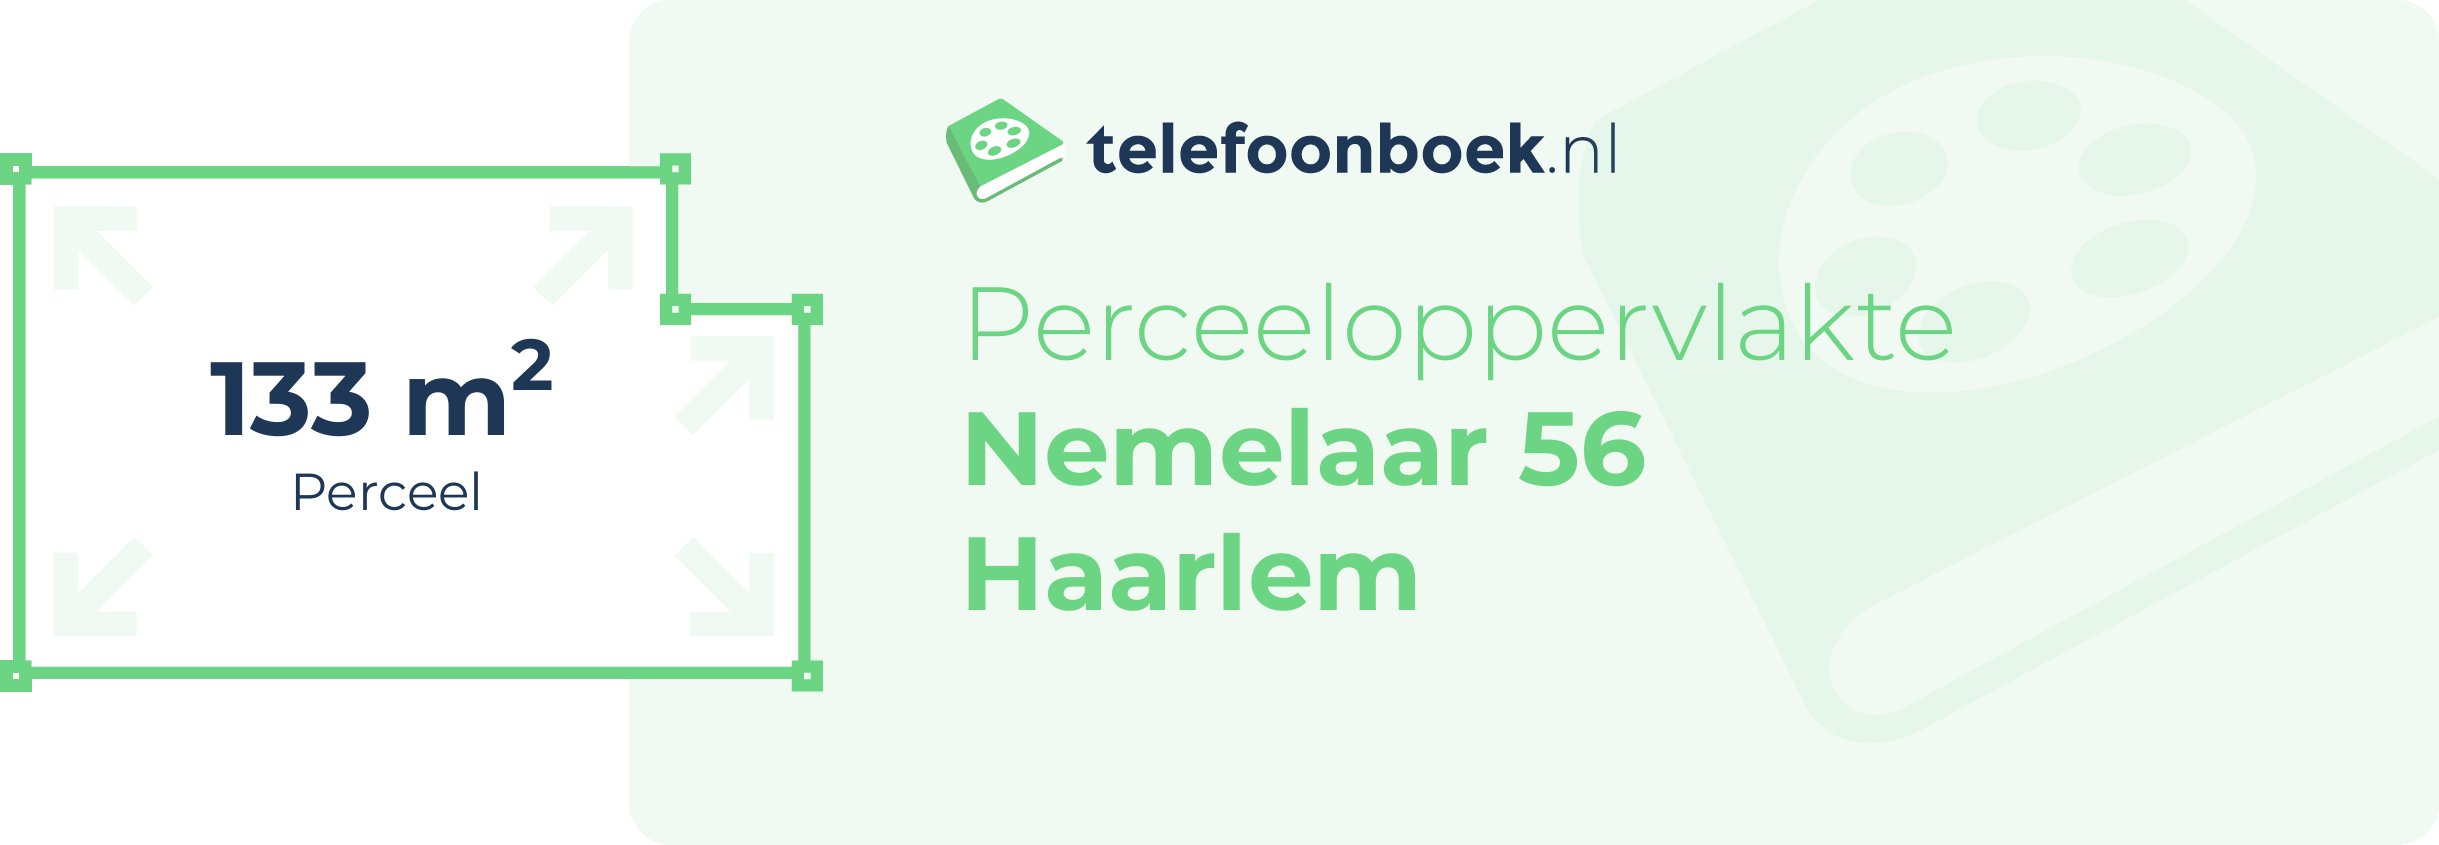 Perceeloppervlakte Nemelaar 56 Haarlem